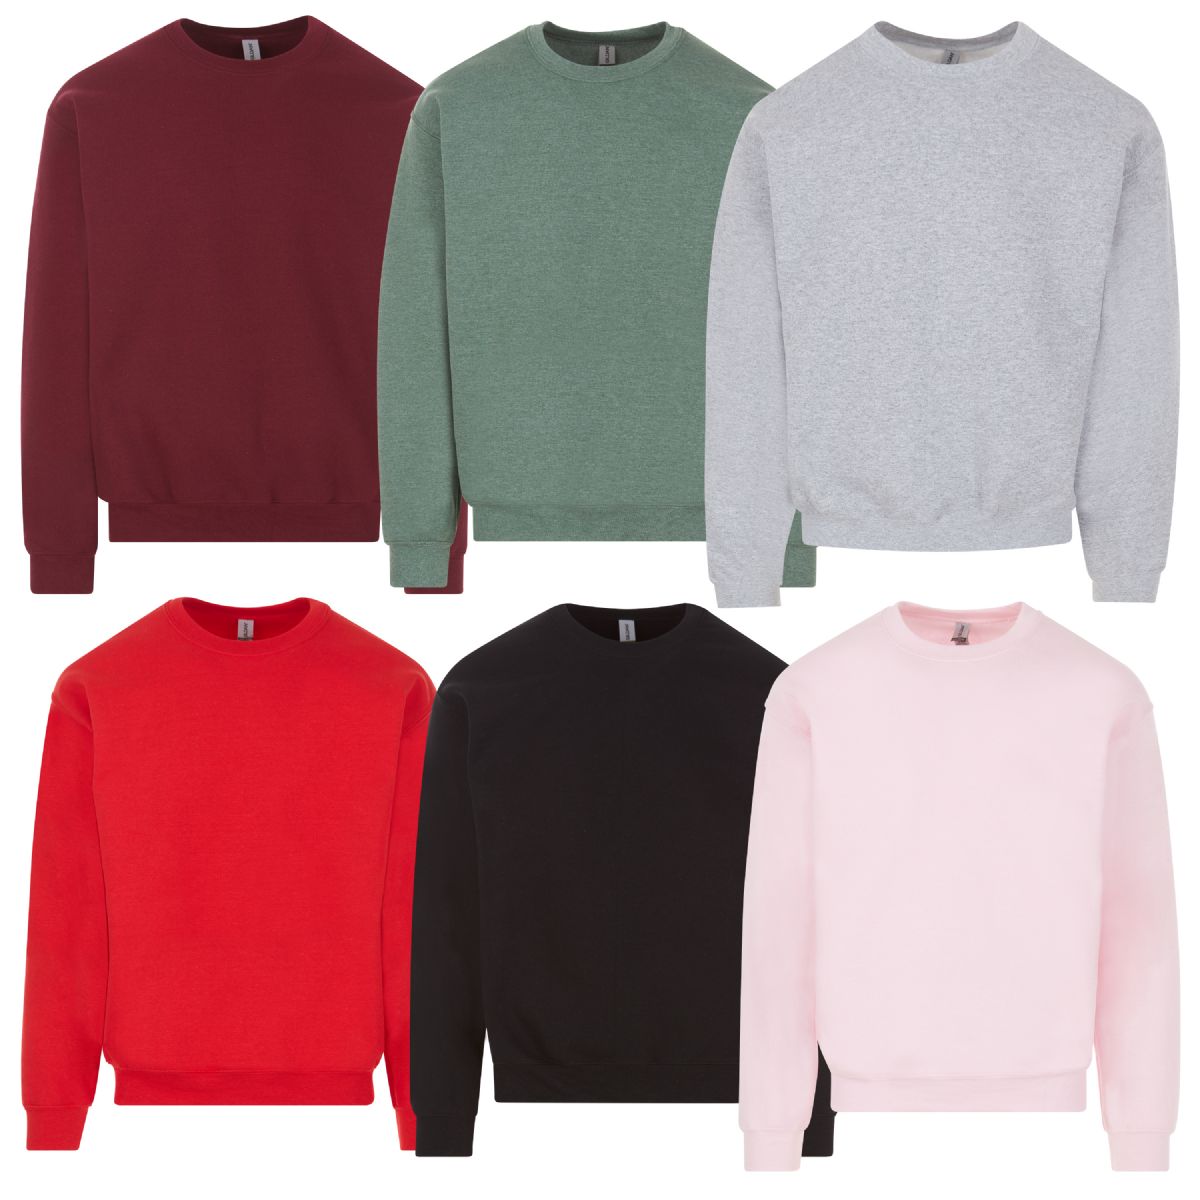 36 Pieces of Gildan Unisex Assorted Colors Fleece Sweat Shirts Size Medium